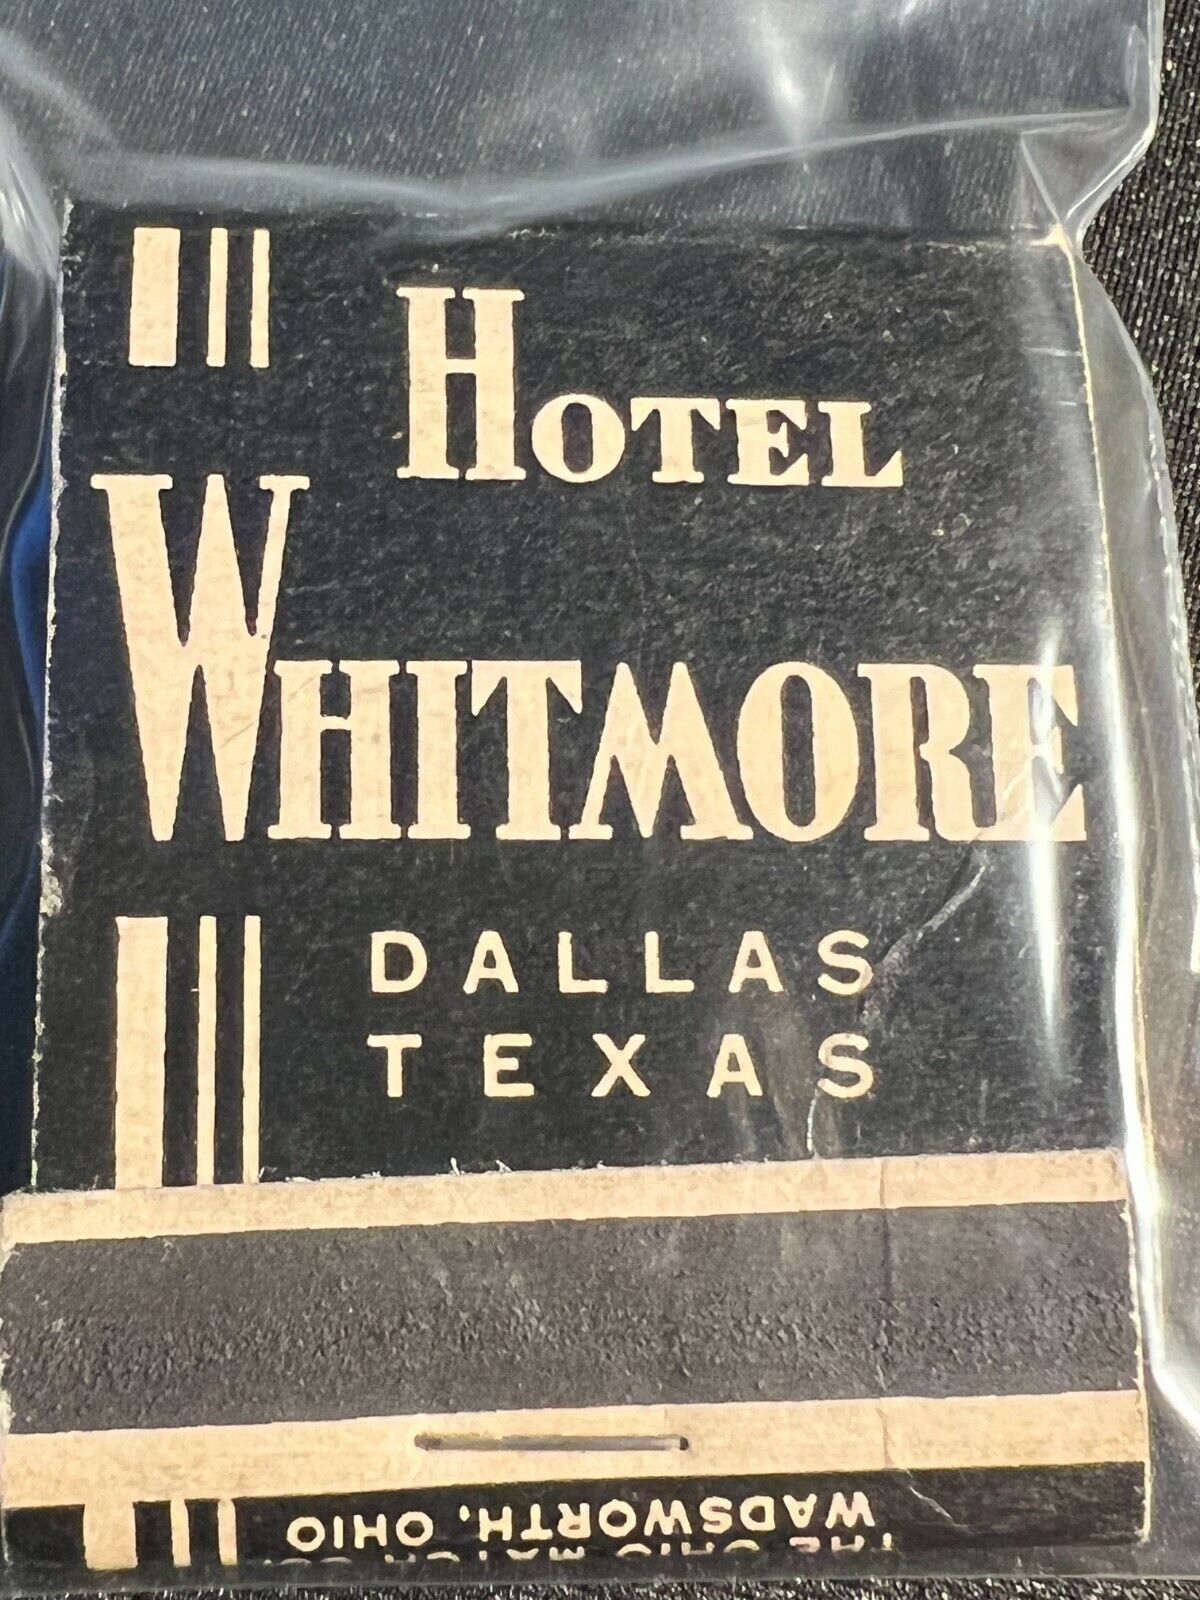 VINTAGE MATCHBOOK - HOTEL WHITMORE - DALLAS, TEXAS -  UNSTRUCK